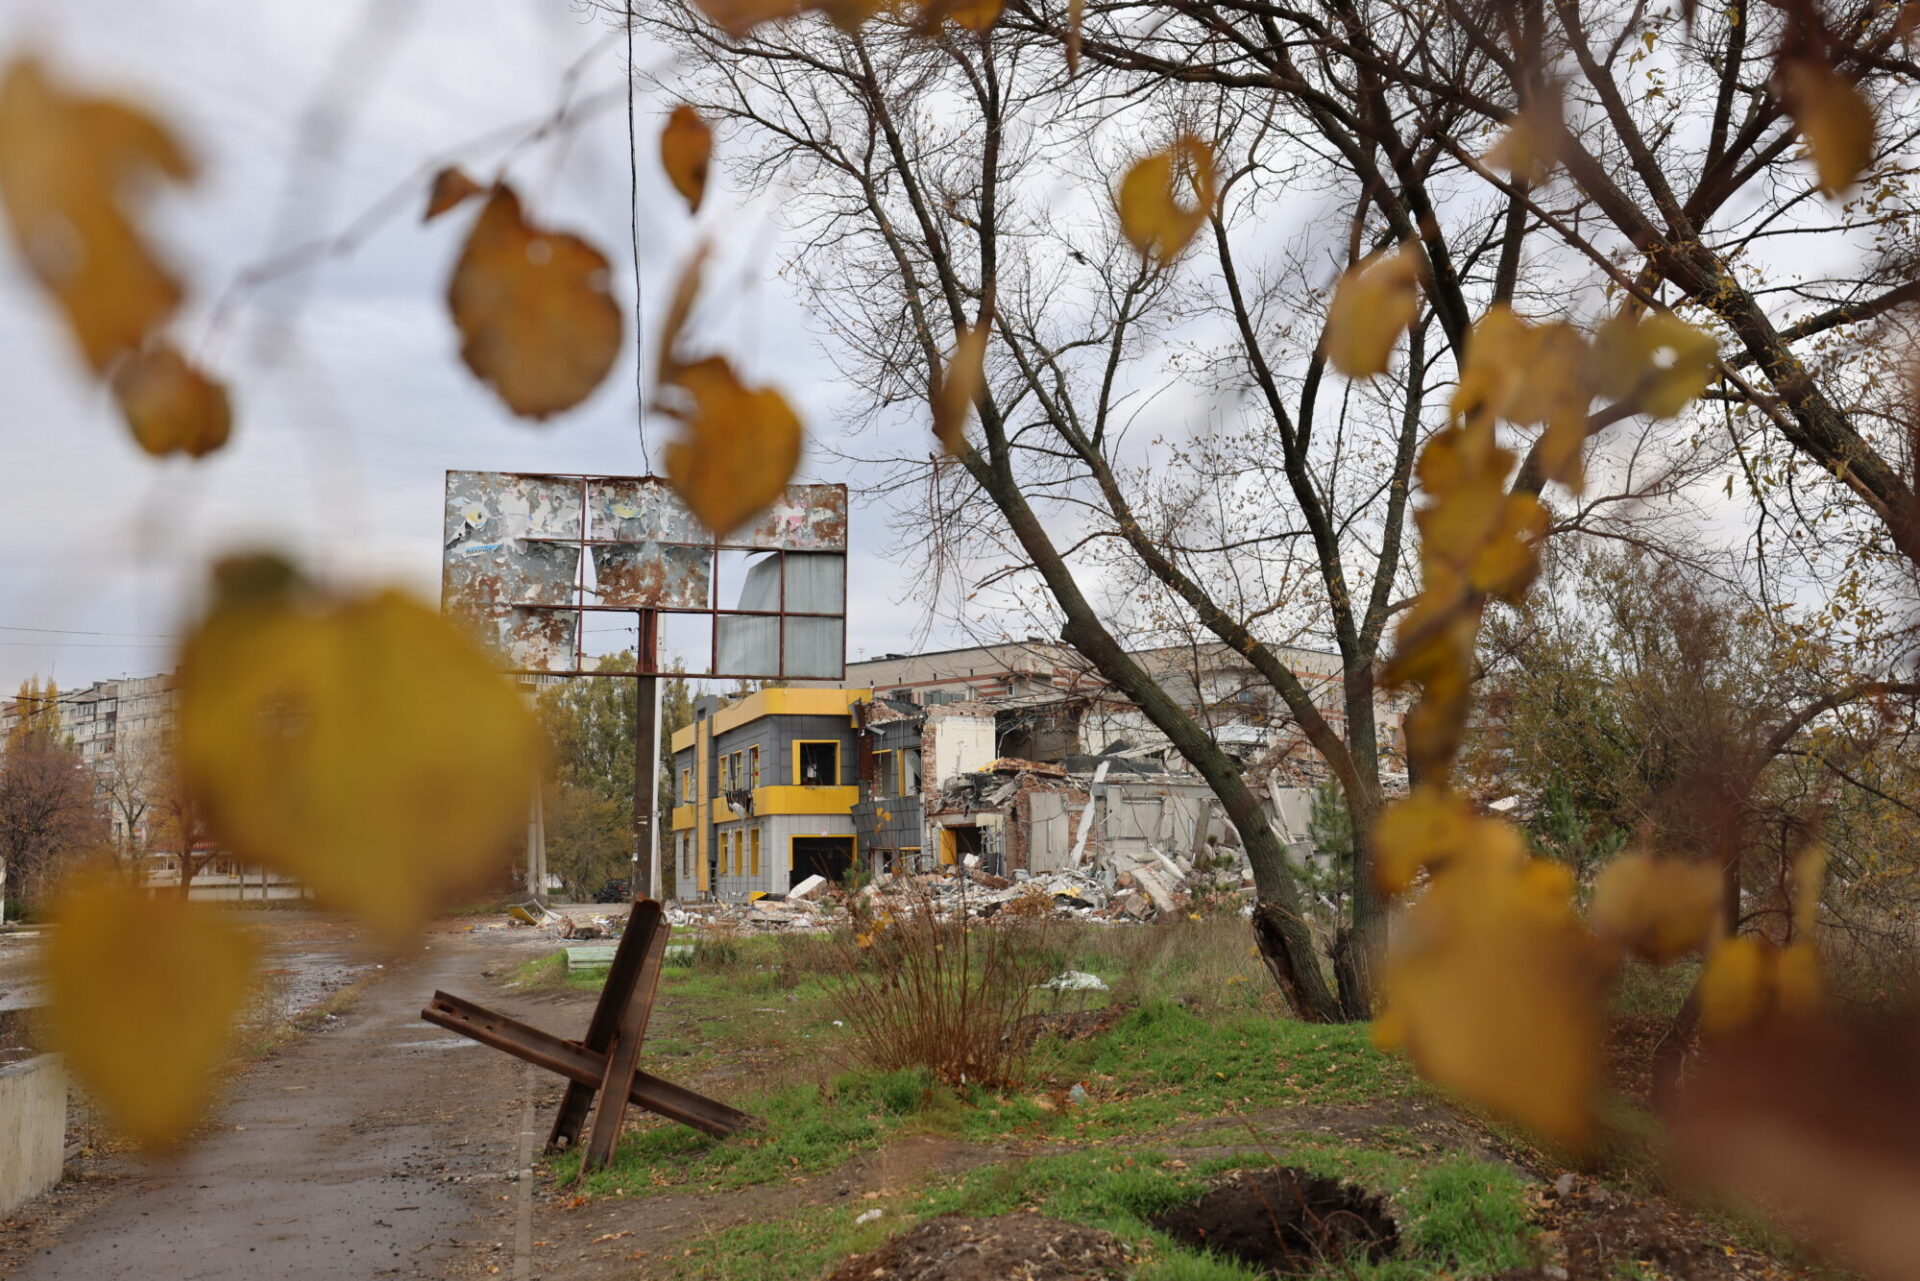 A collapsed building in Ukraine